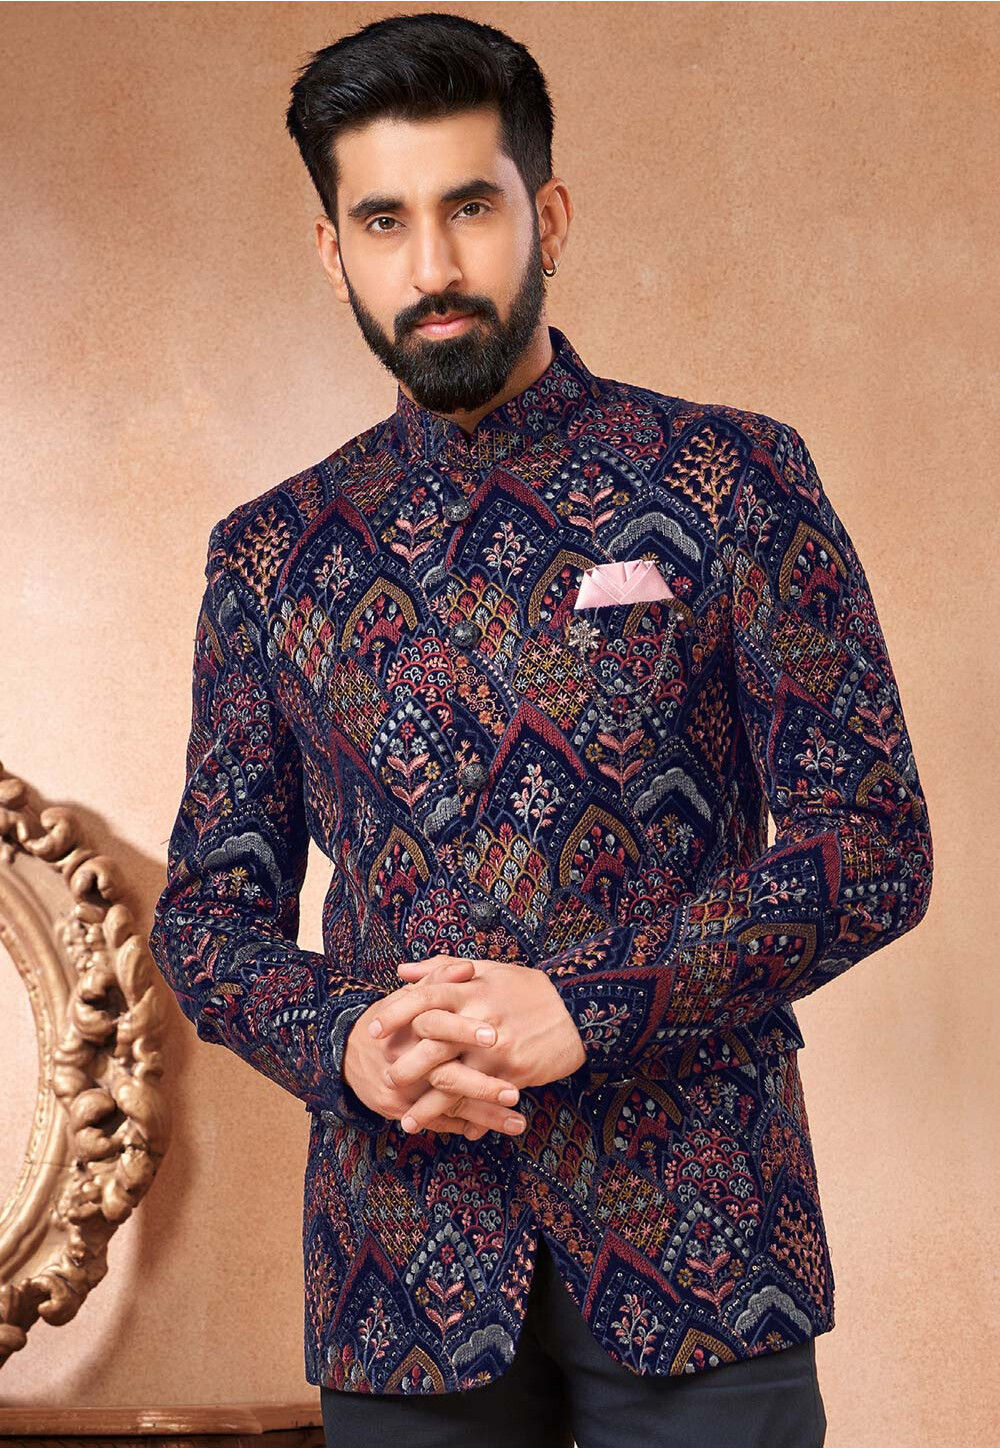 Jodhpuri Coat for Men Boys Self Designed Indian Blue Coat Pant - Etsy |  Blazers for men casual, Jodhpuri suits for men, Blue coat pant